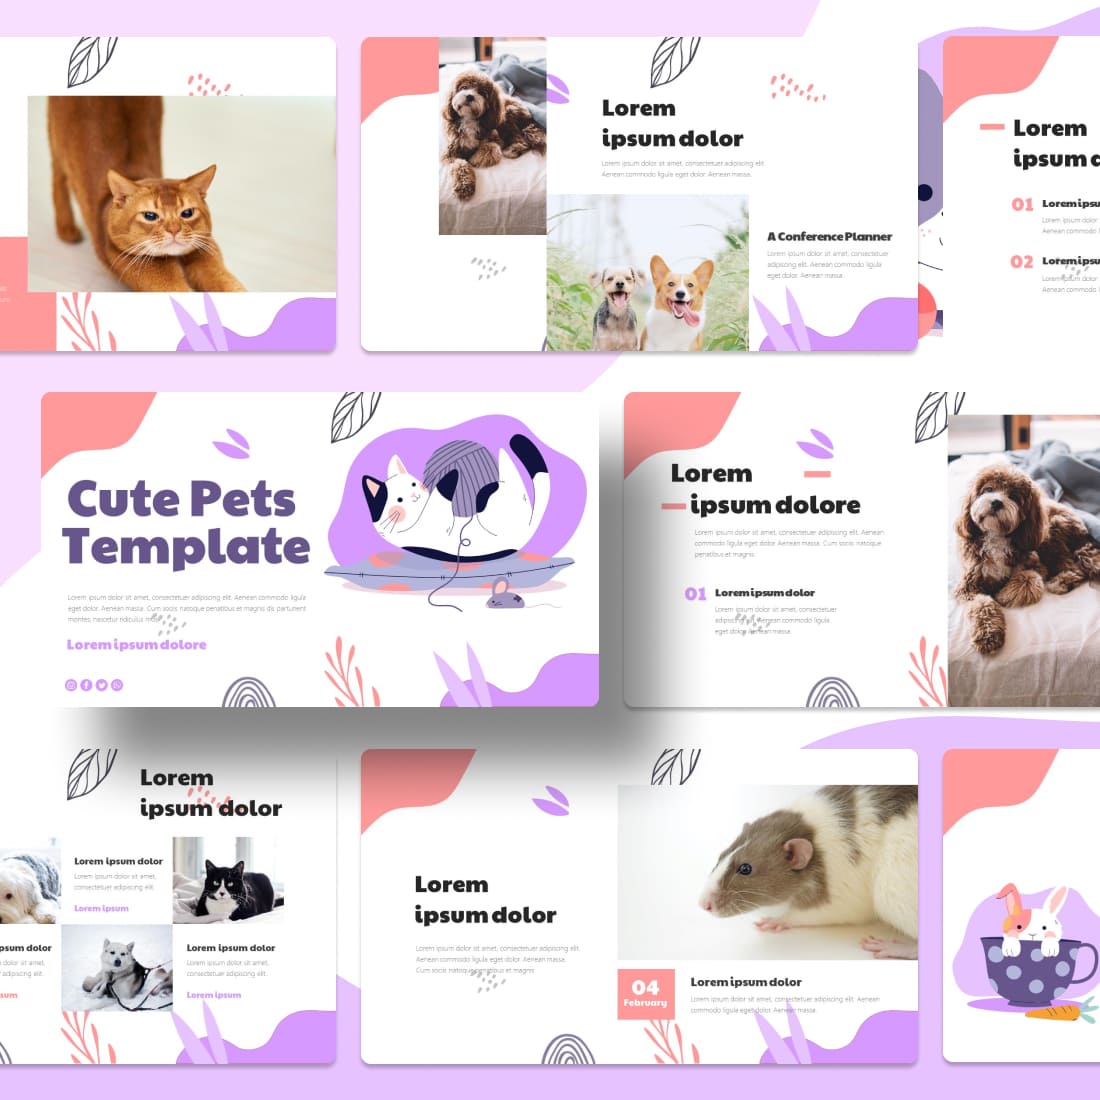 Cute Pets Presentation Template cover.